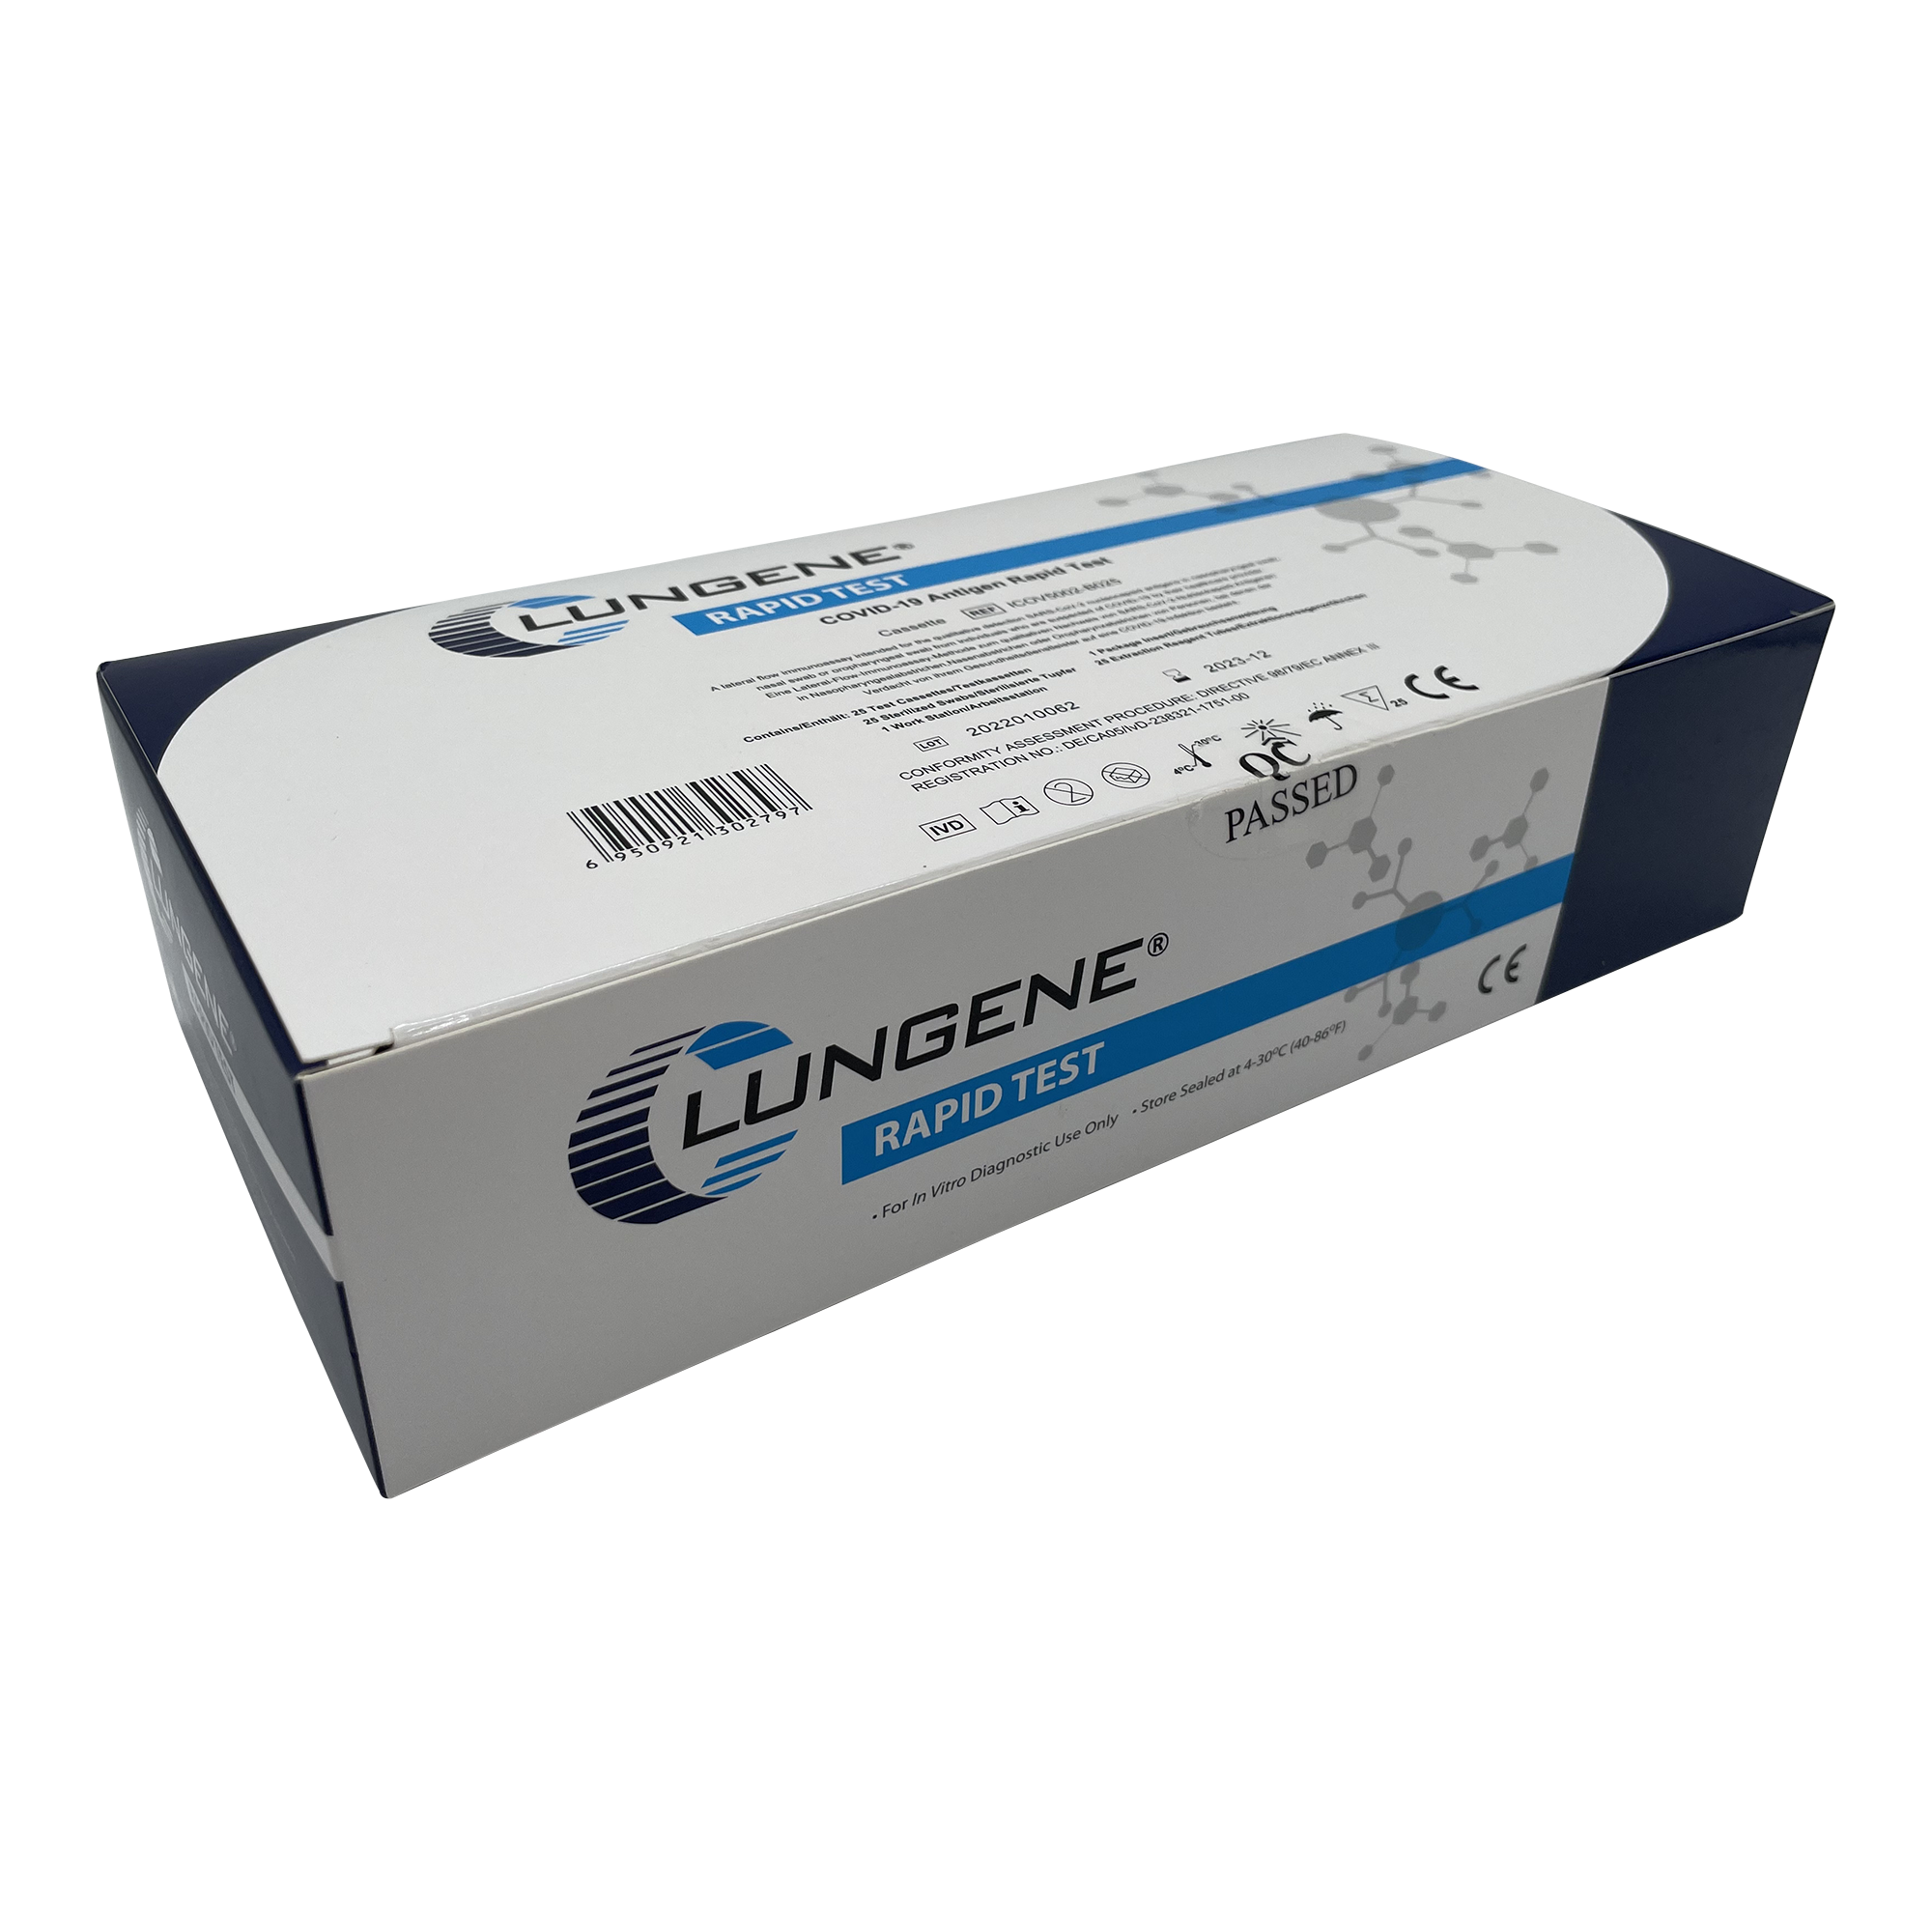 CLUNGENE COVID-19 Antigen Rapid Test 3in1